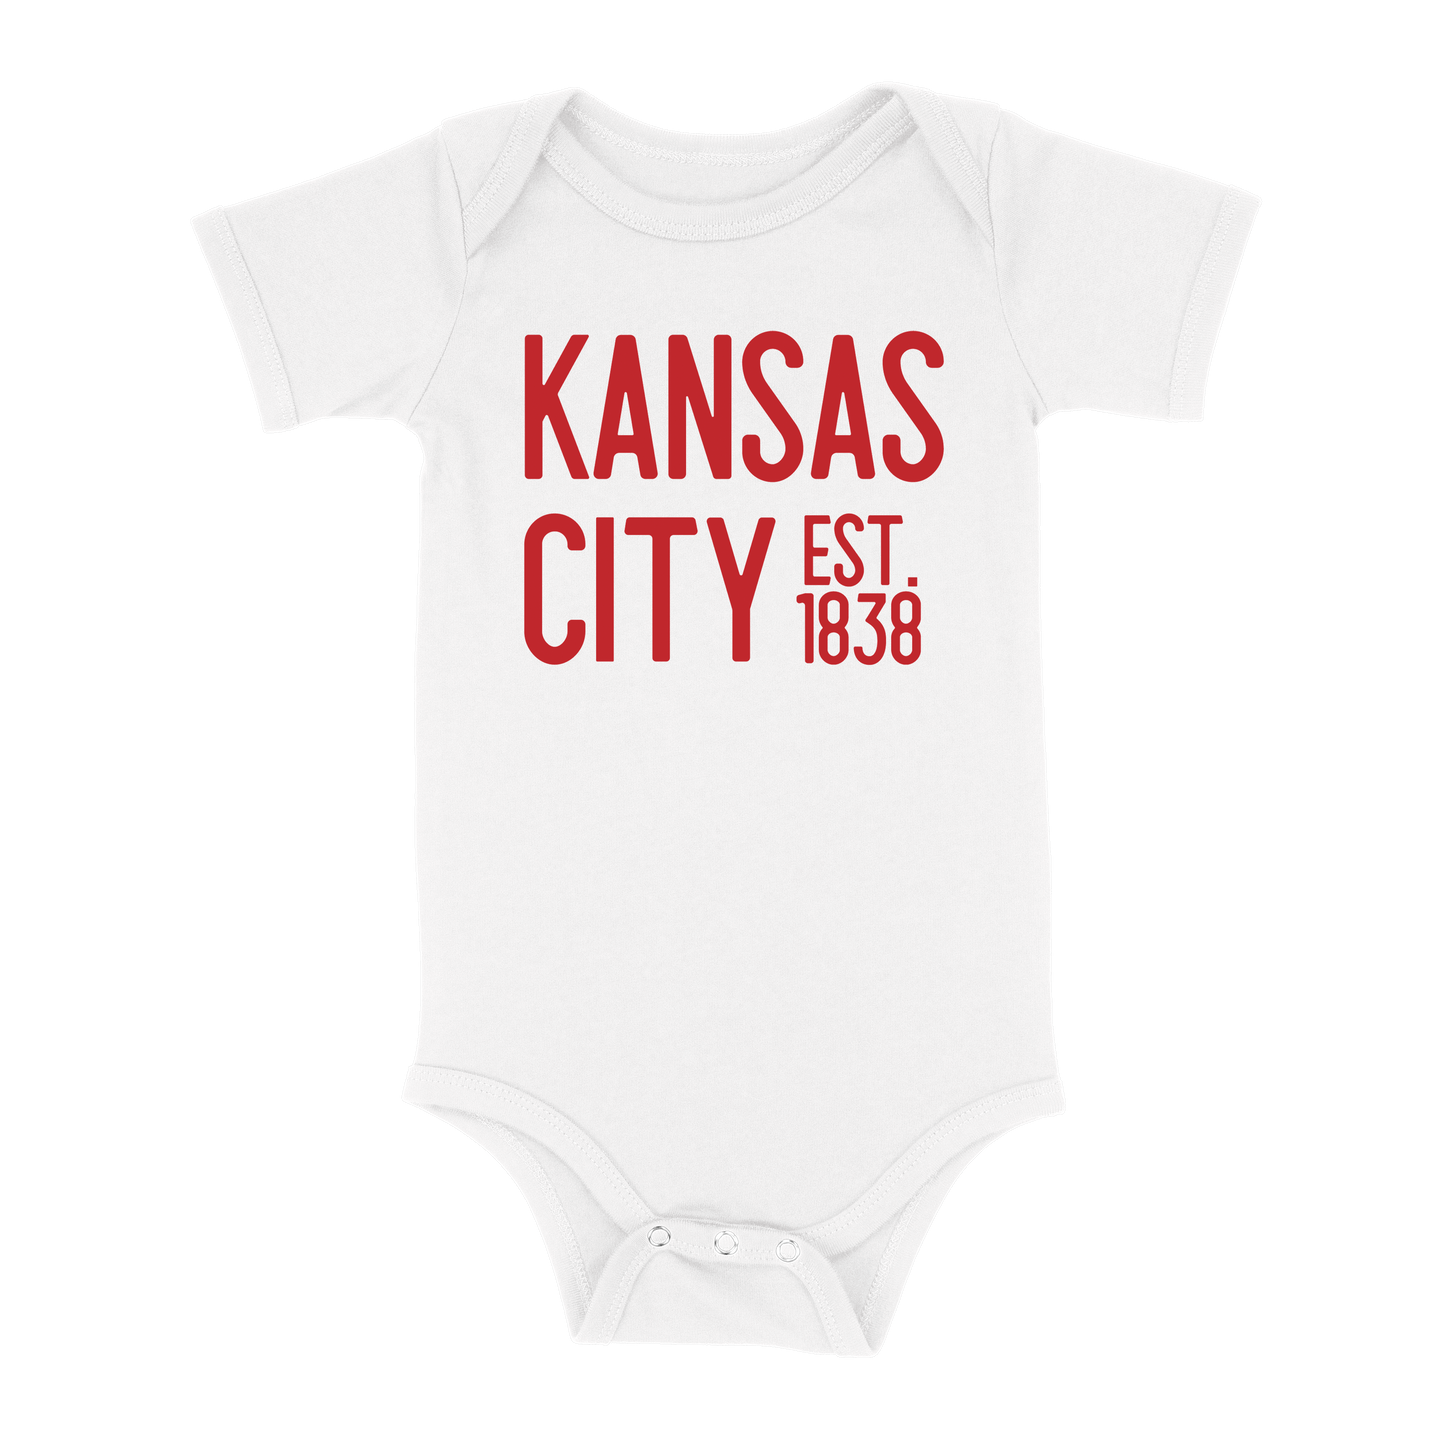 Kansas City EST 1838 Baby One Piece | White Red